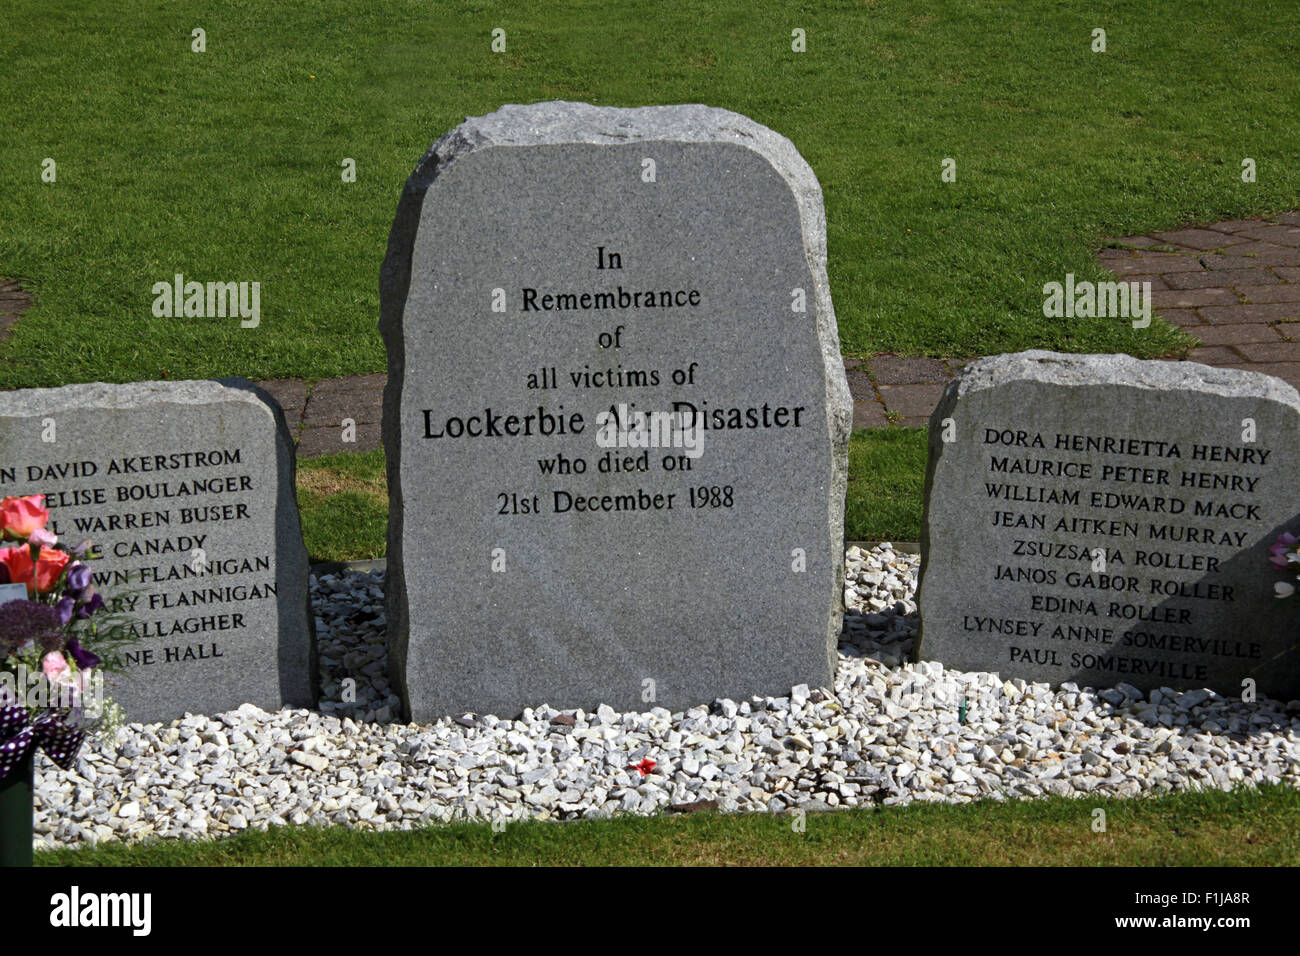 Lockerbie PanAm103 In Remembrance Memorial Stone, Scotland, UK, DG11 1HZ - Dumfries Road, Dumfriesshire Stock Photo